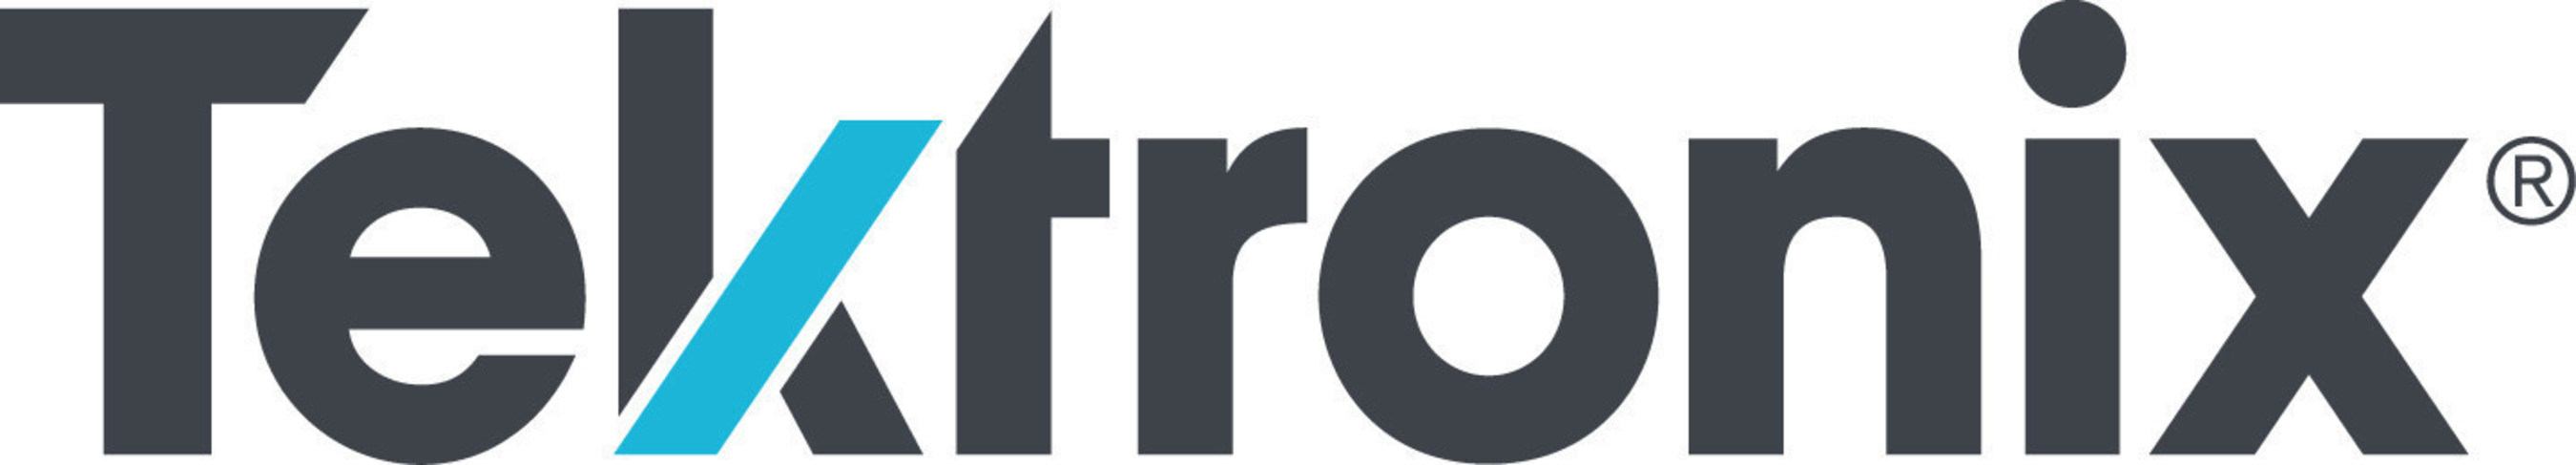 Tektronics logo